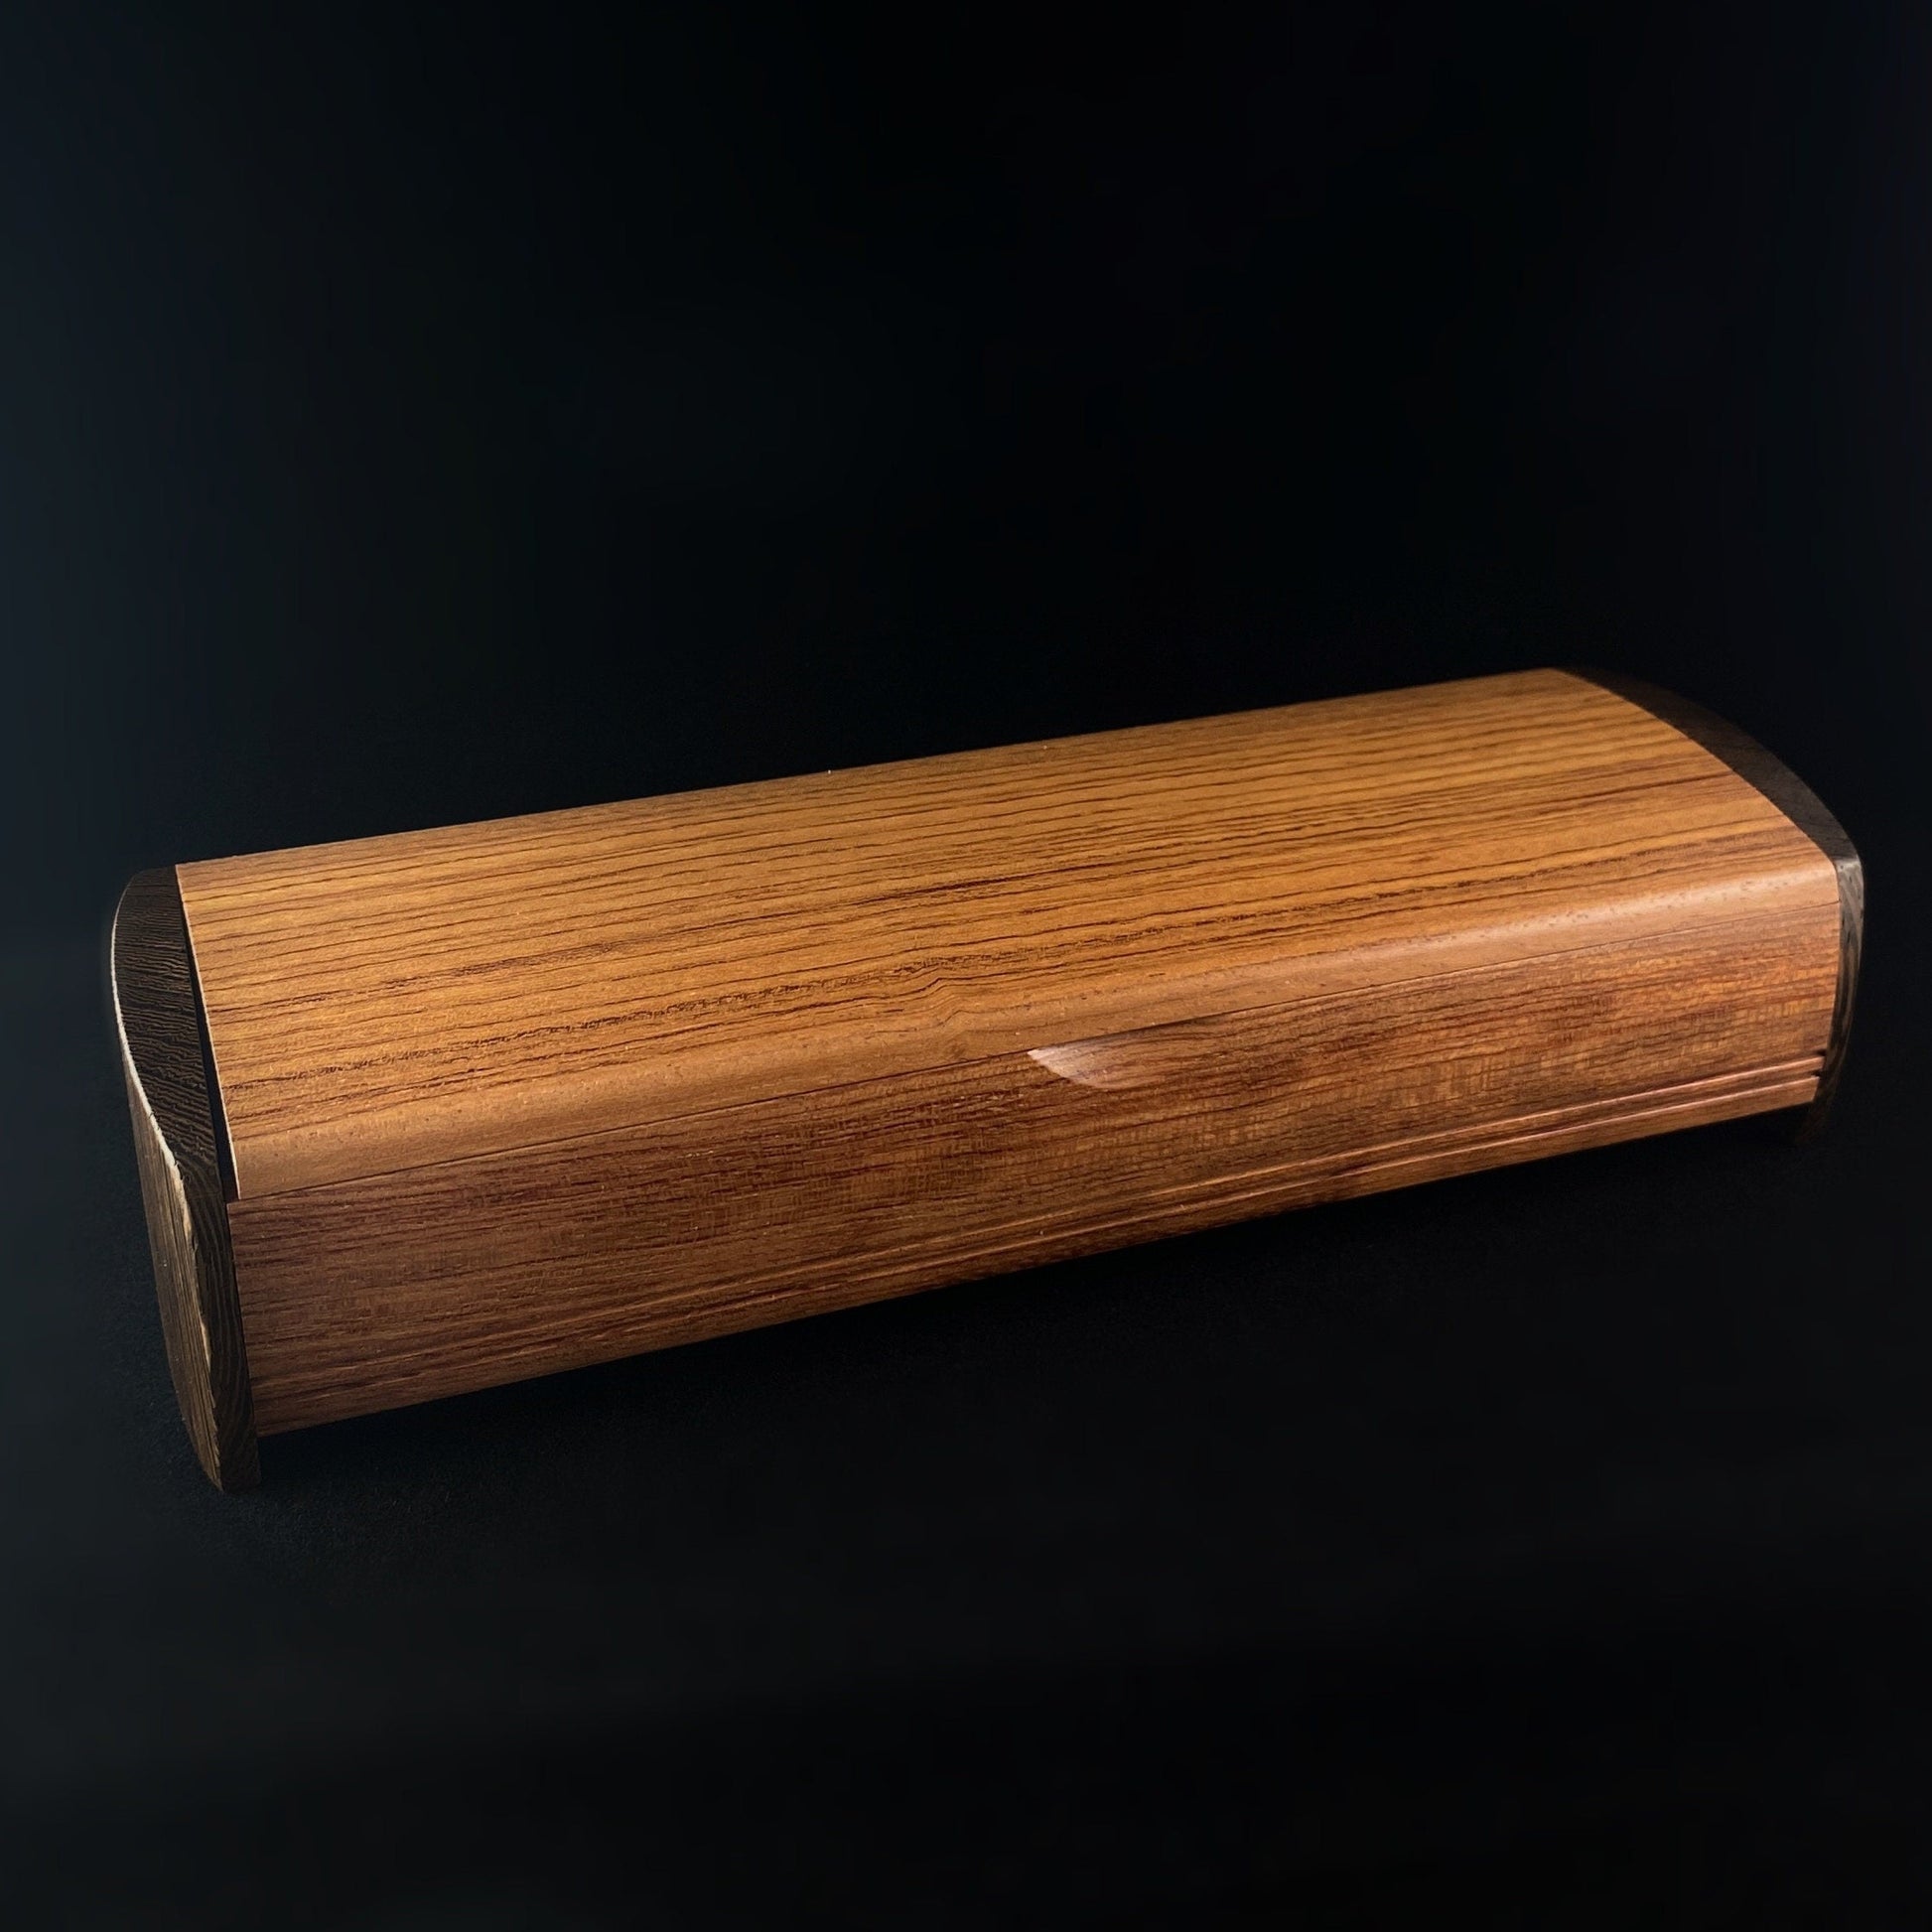 Handmade Wooden Treasure Chest with Bubinga and Wenge, Made in USA